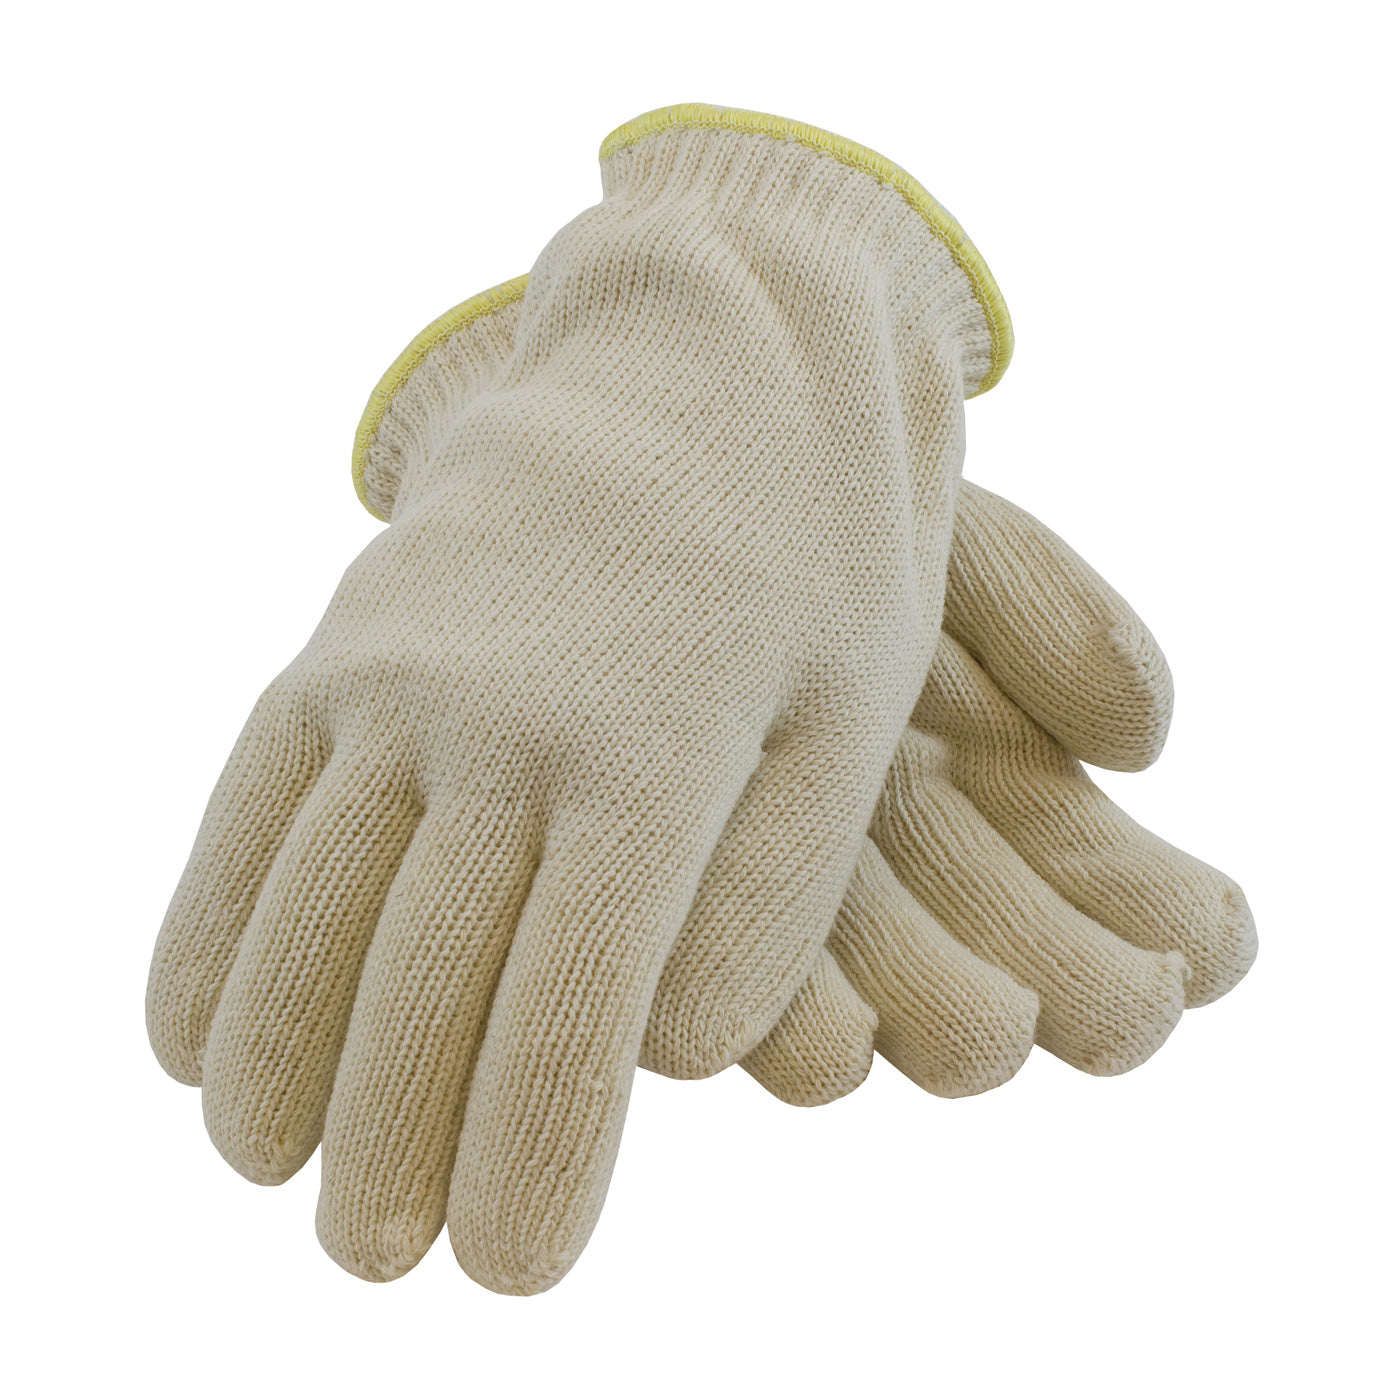 PIP 43-500XS Double-Layered Cotton Seamless Knit Hot Mill Glove - 24 oz